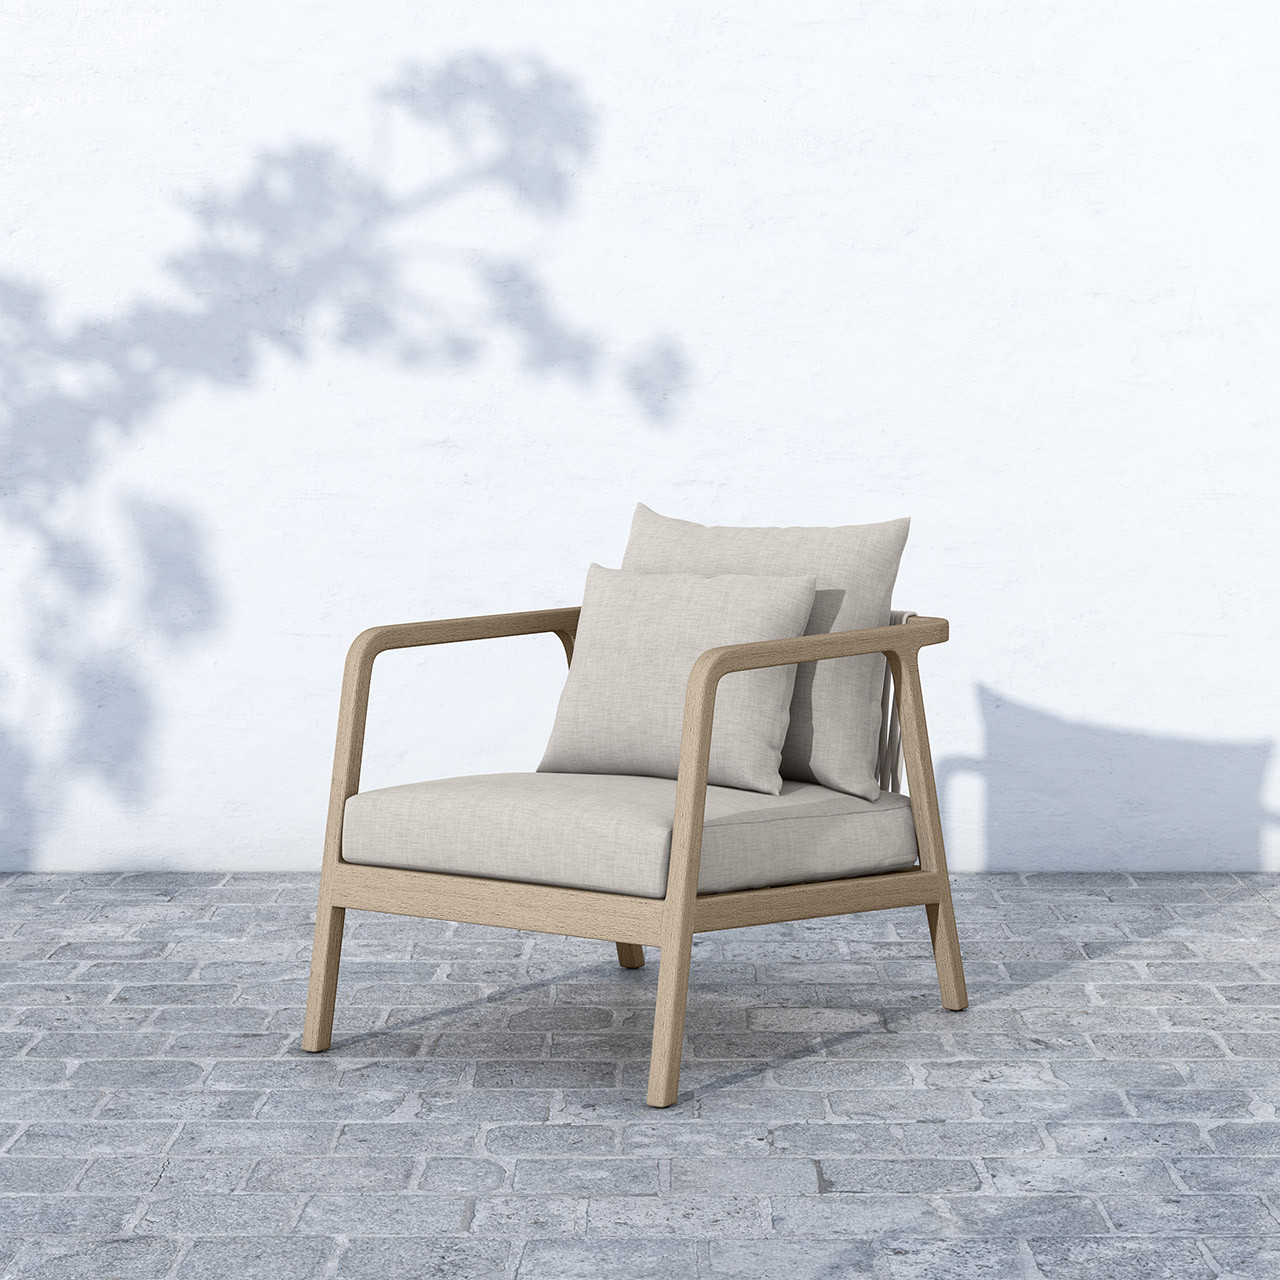 La Palma Teak Outdoor Lounge Chair - Washed Brown